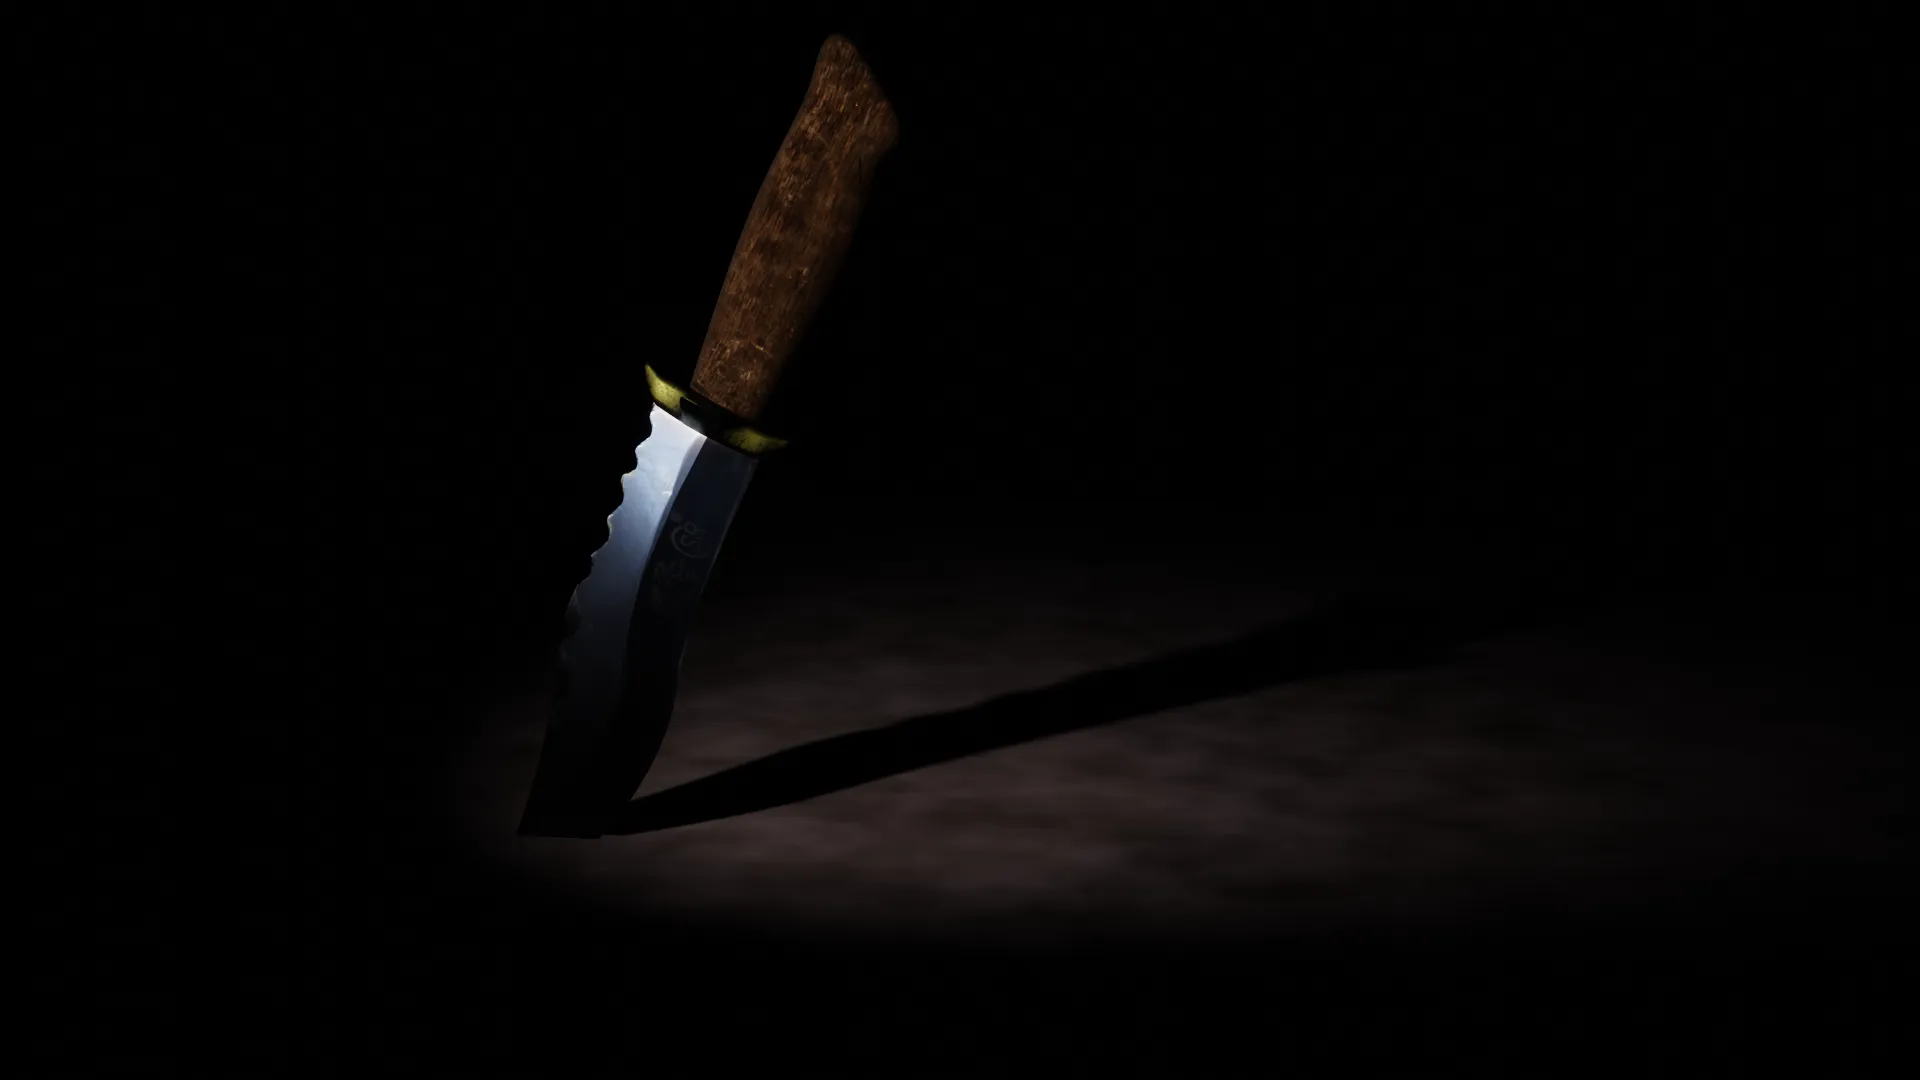 A knife.